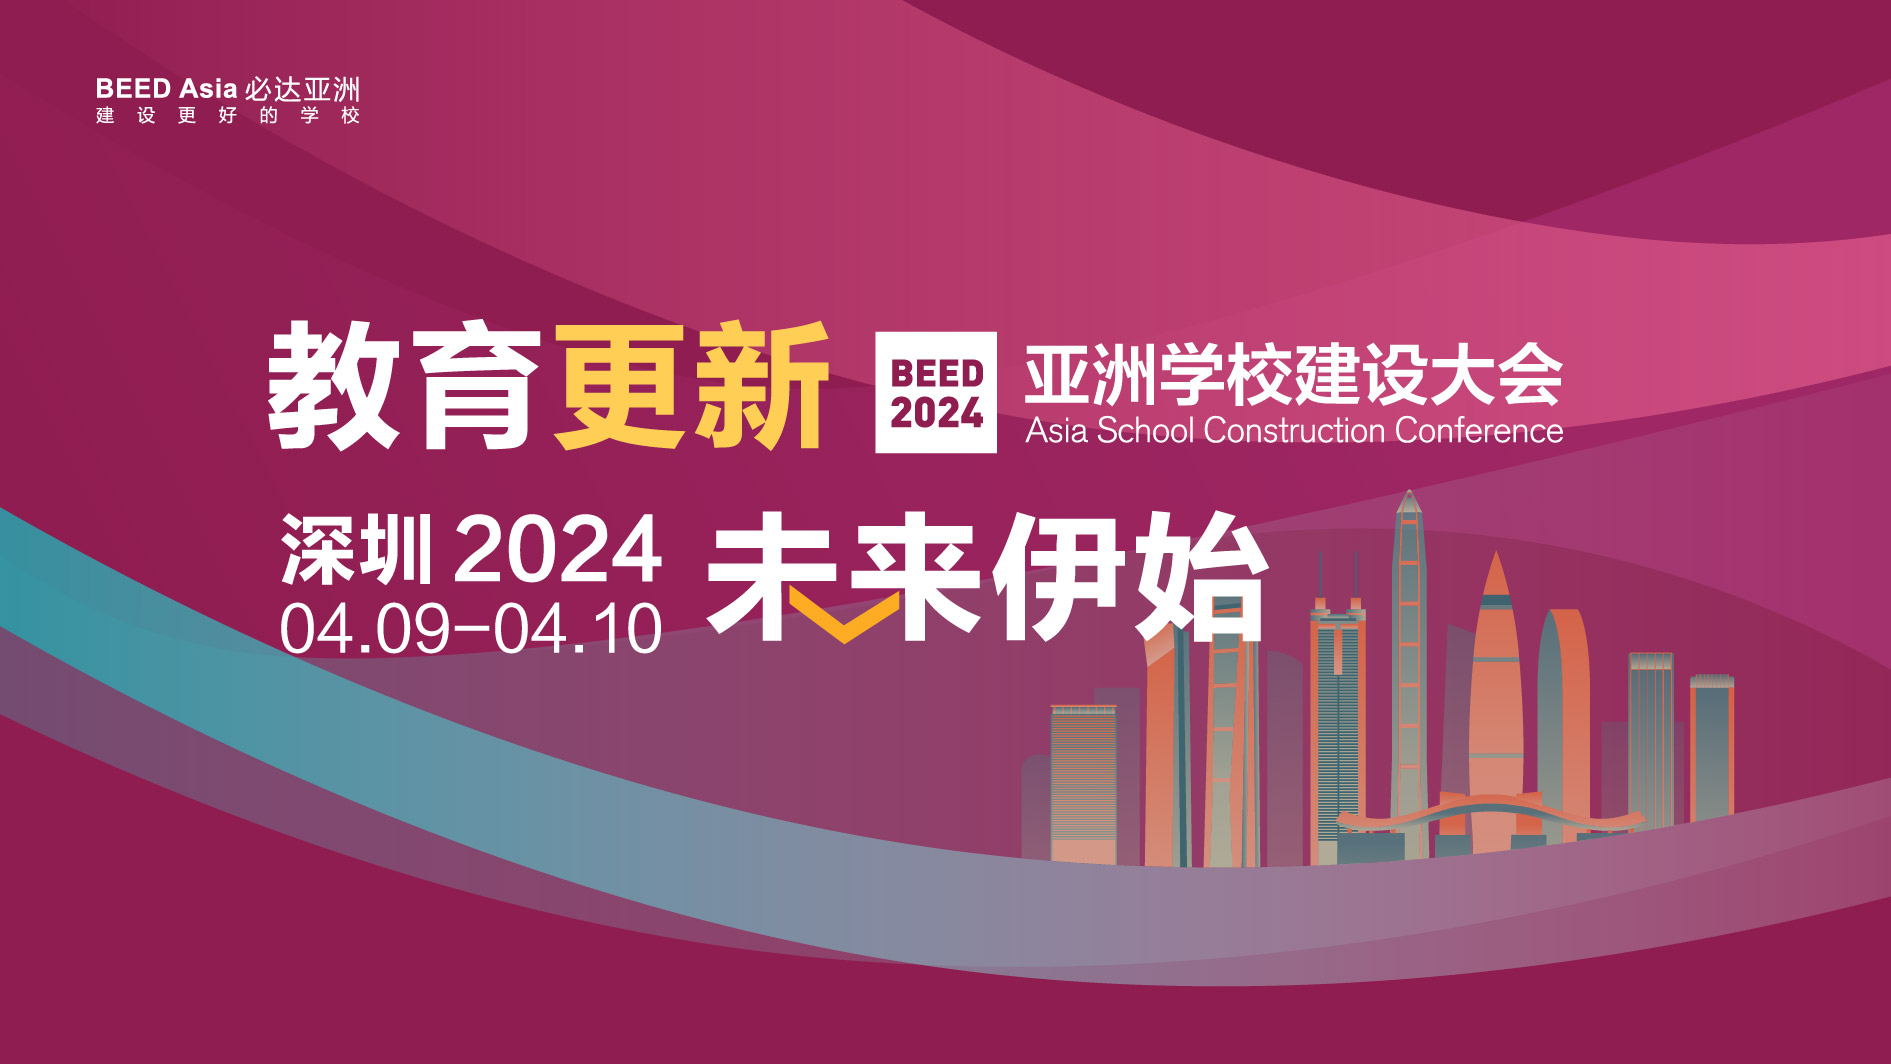 BEED 2024亚洲学校建设大会